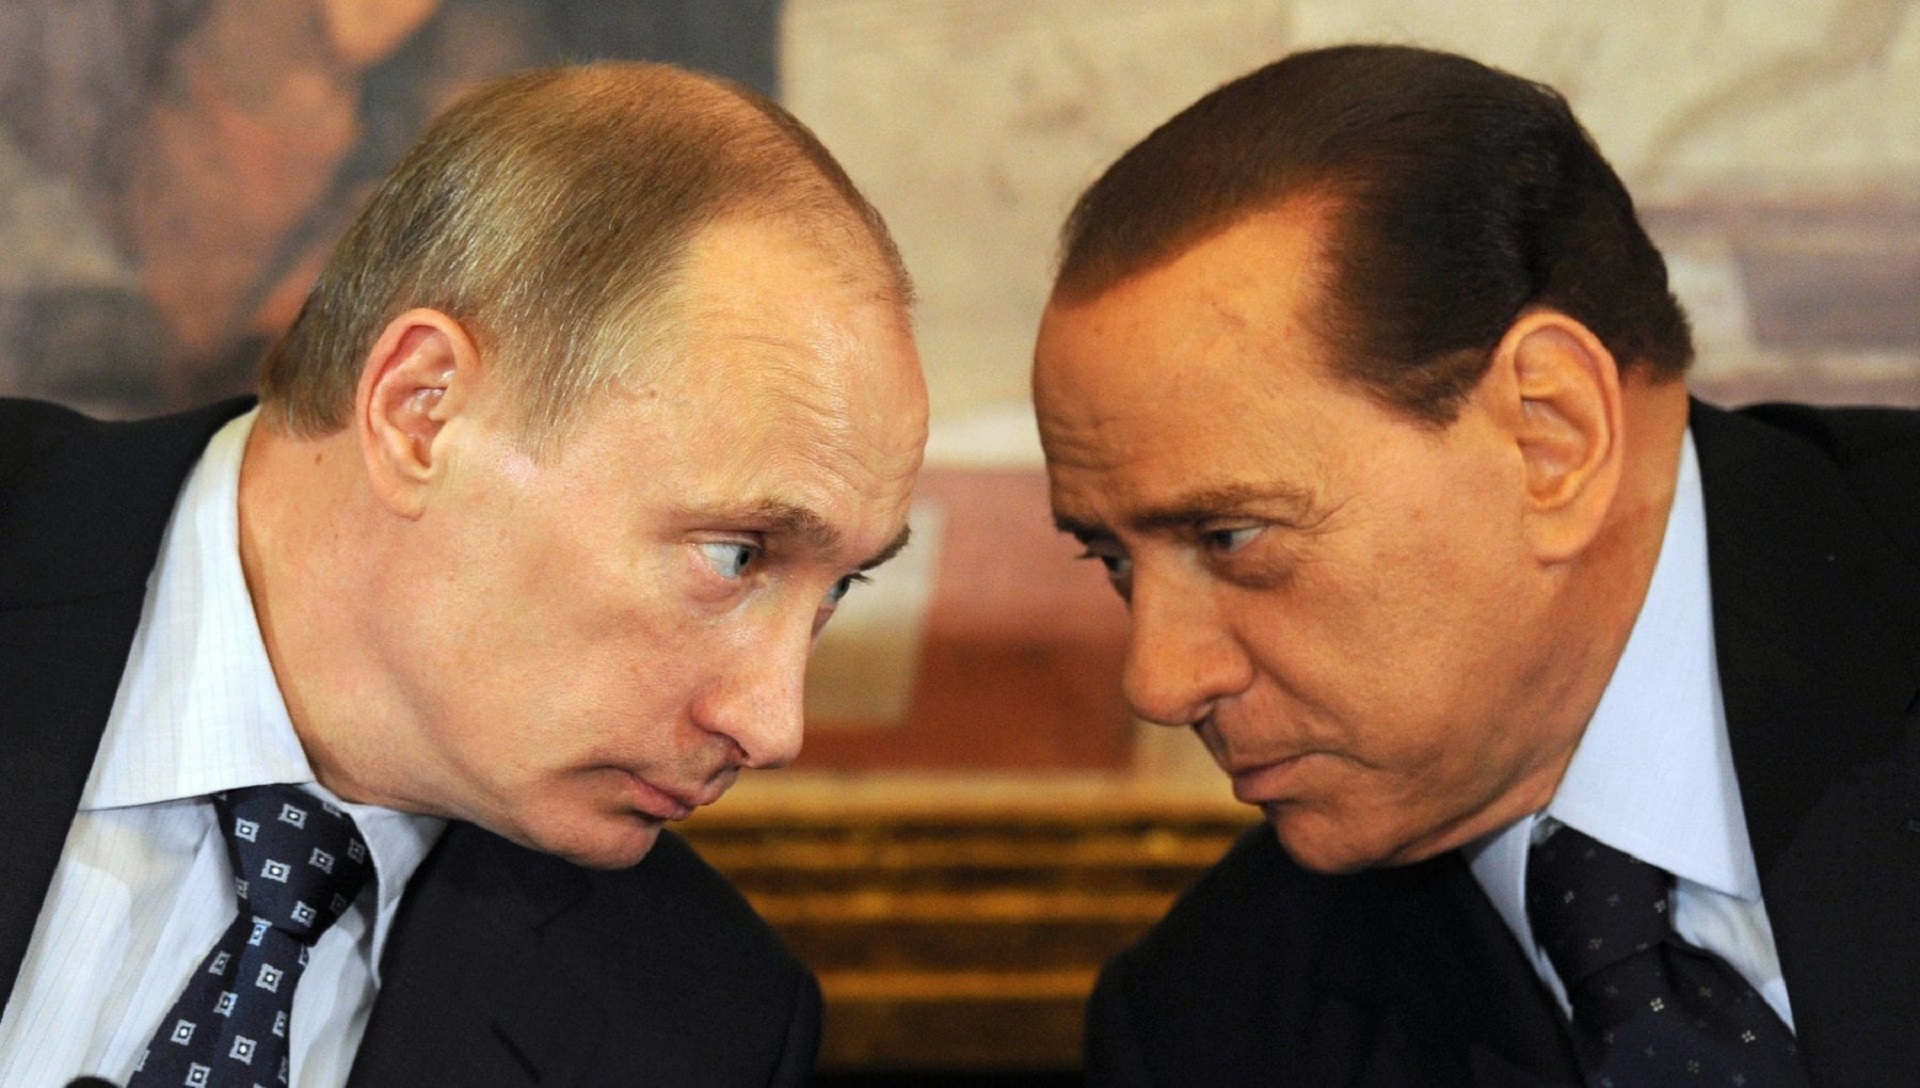 Свобода нравов у политиков. Берлускони 2006. Сильвио Берлускони друг Путина.